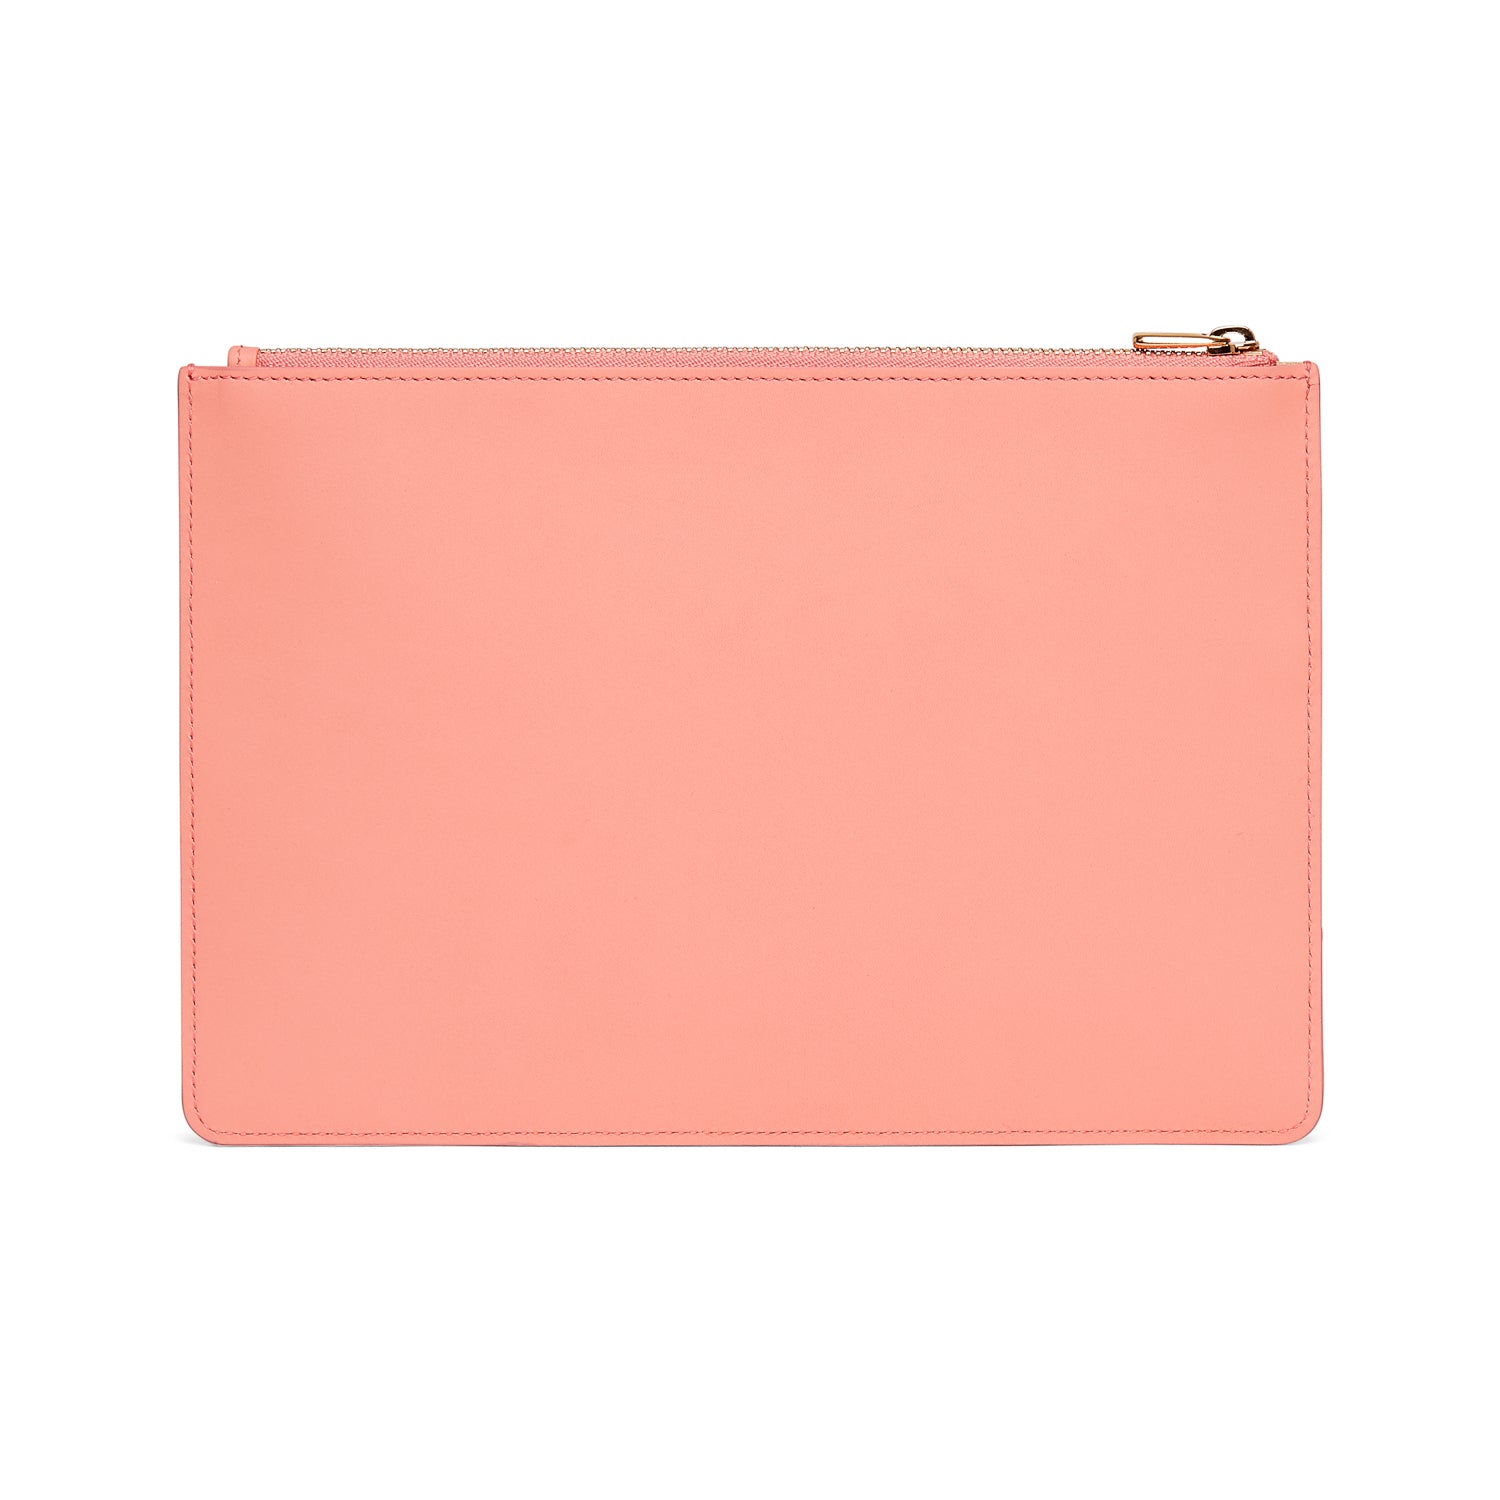 luxury british design simple elegant travel wallet in pink